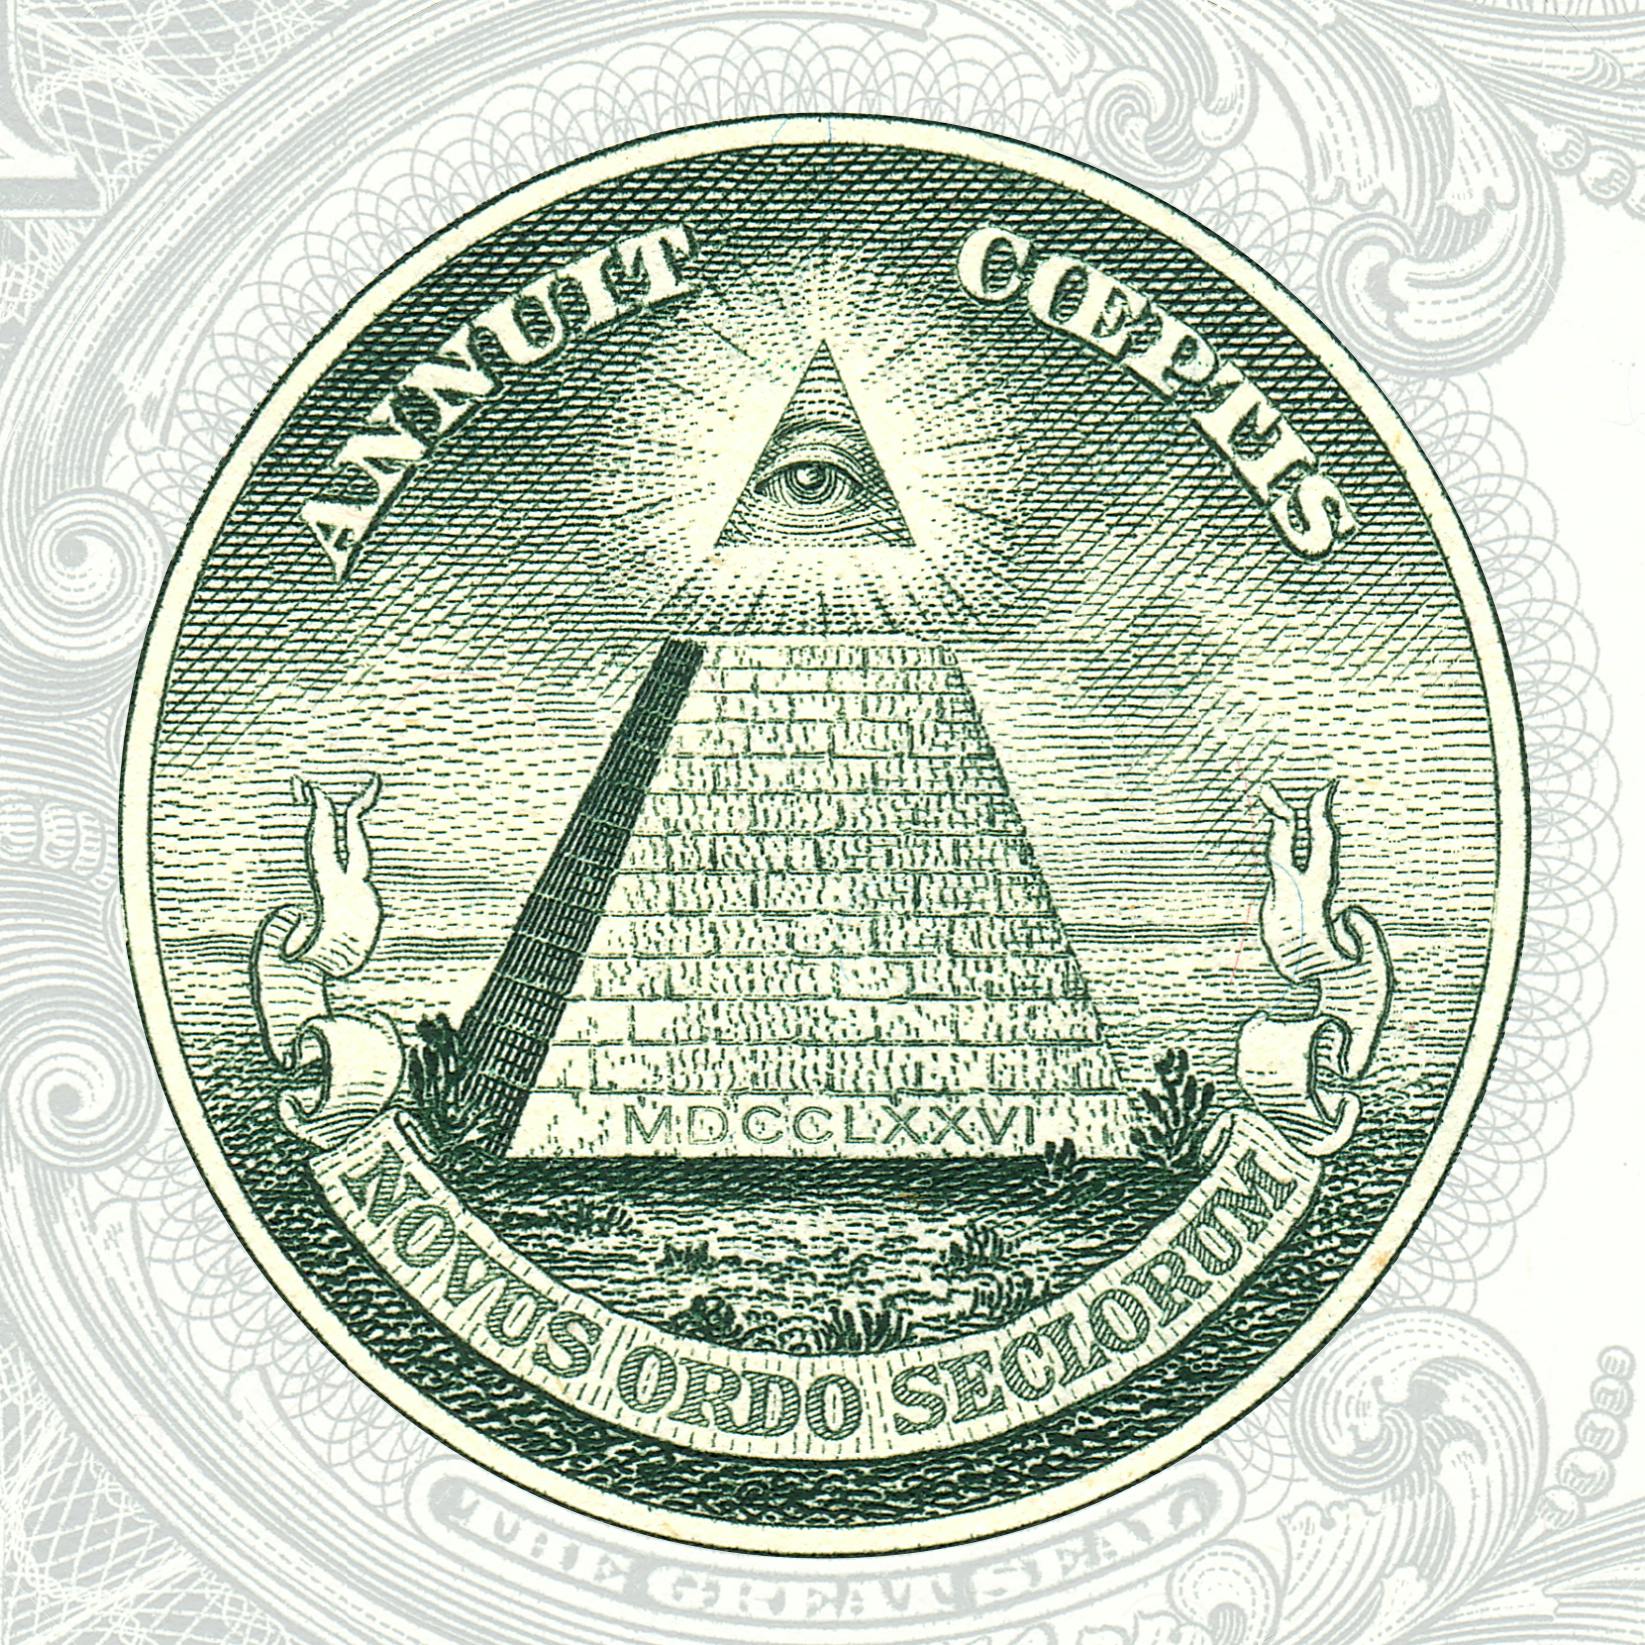 Bilderberg Meeting, Contract Negotiations & the Illuminati Image